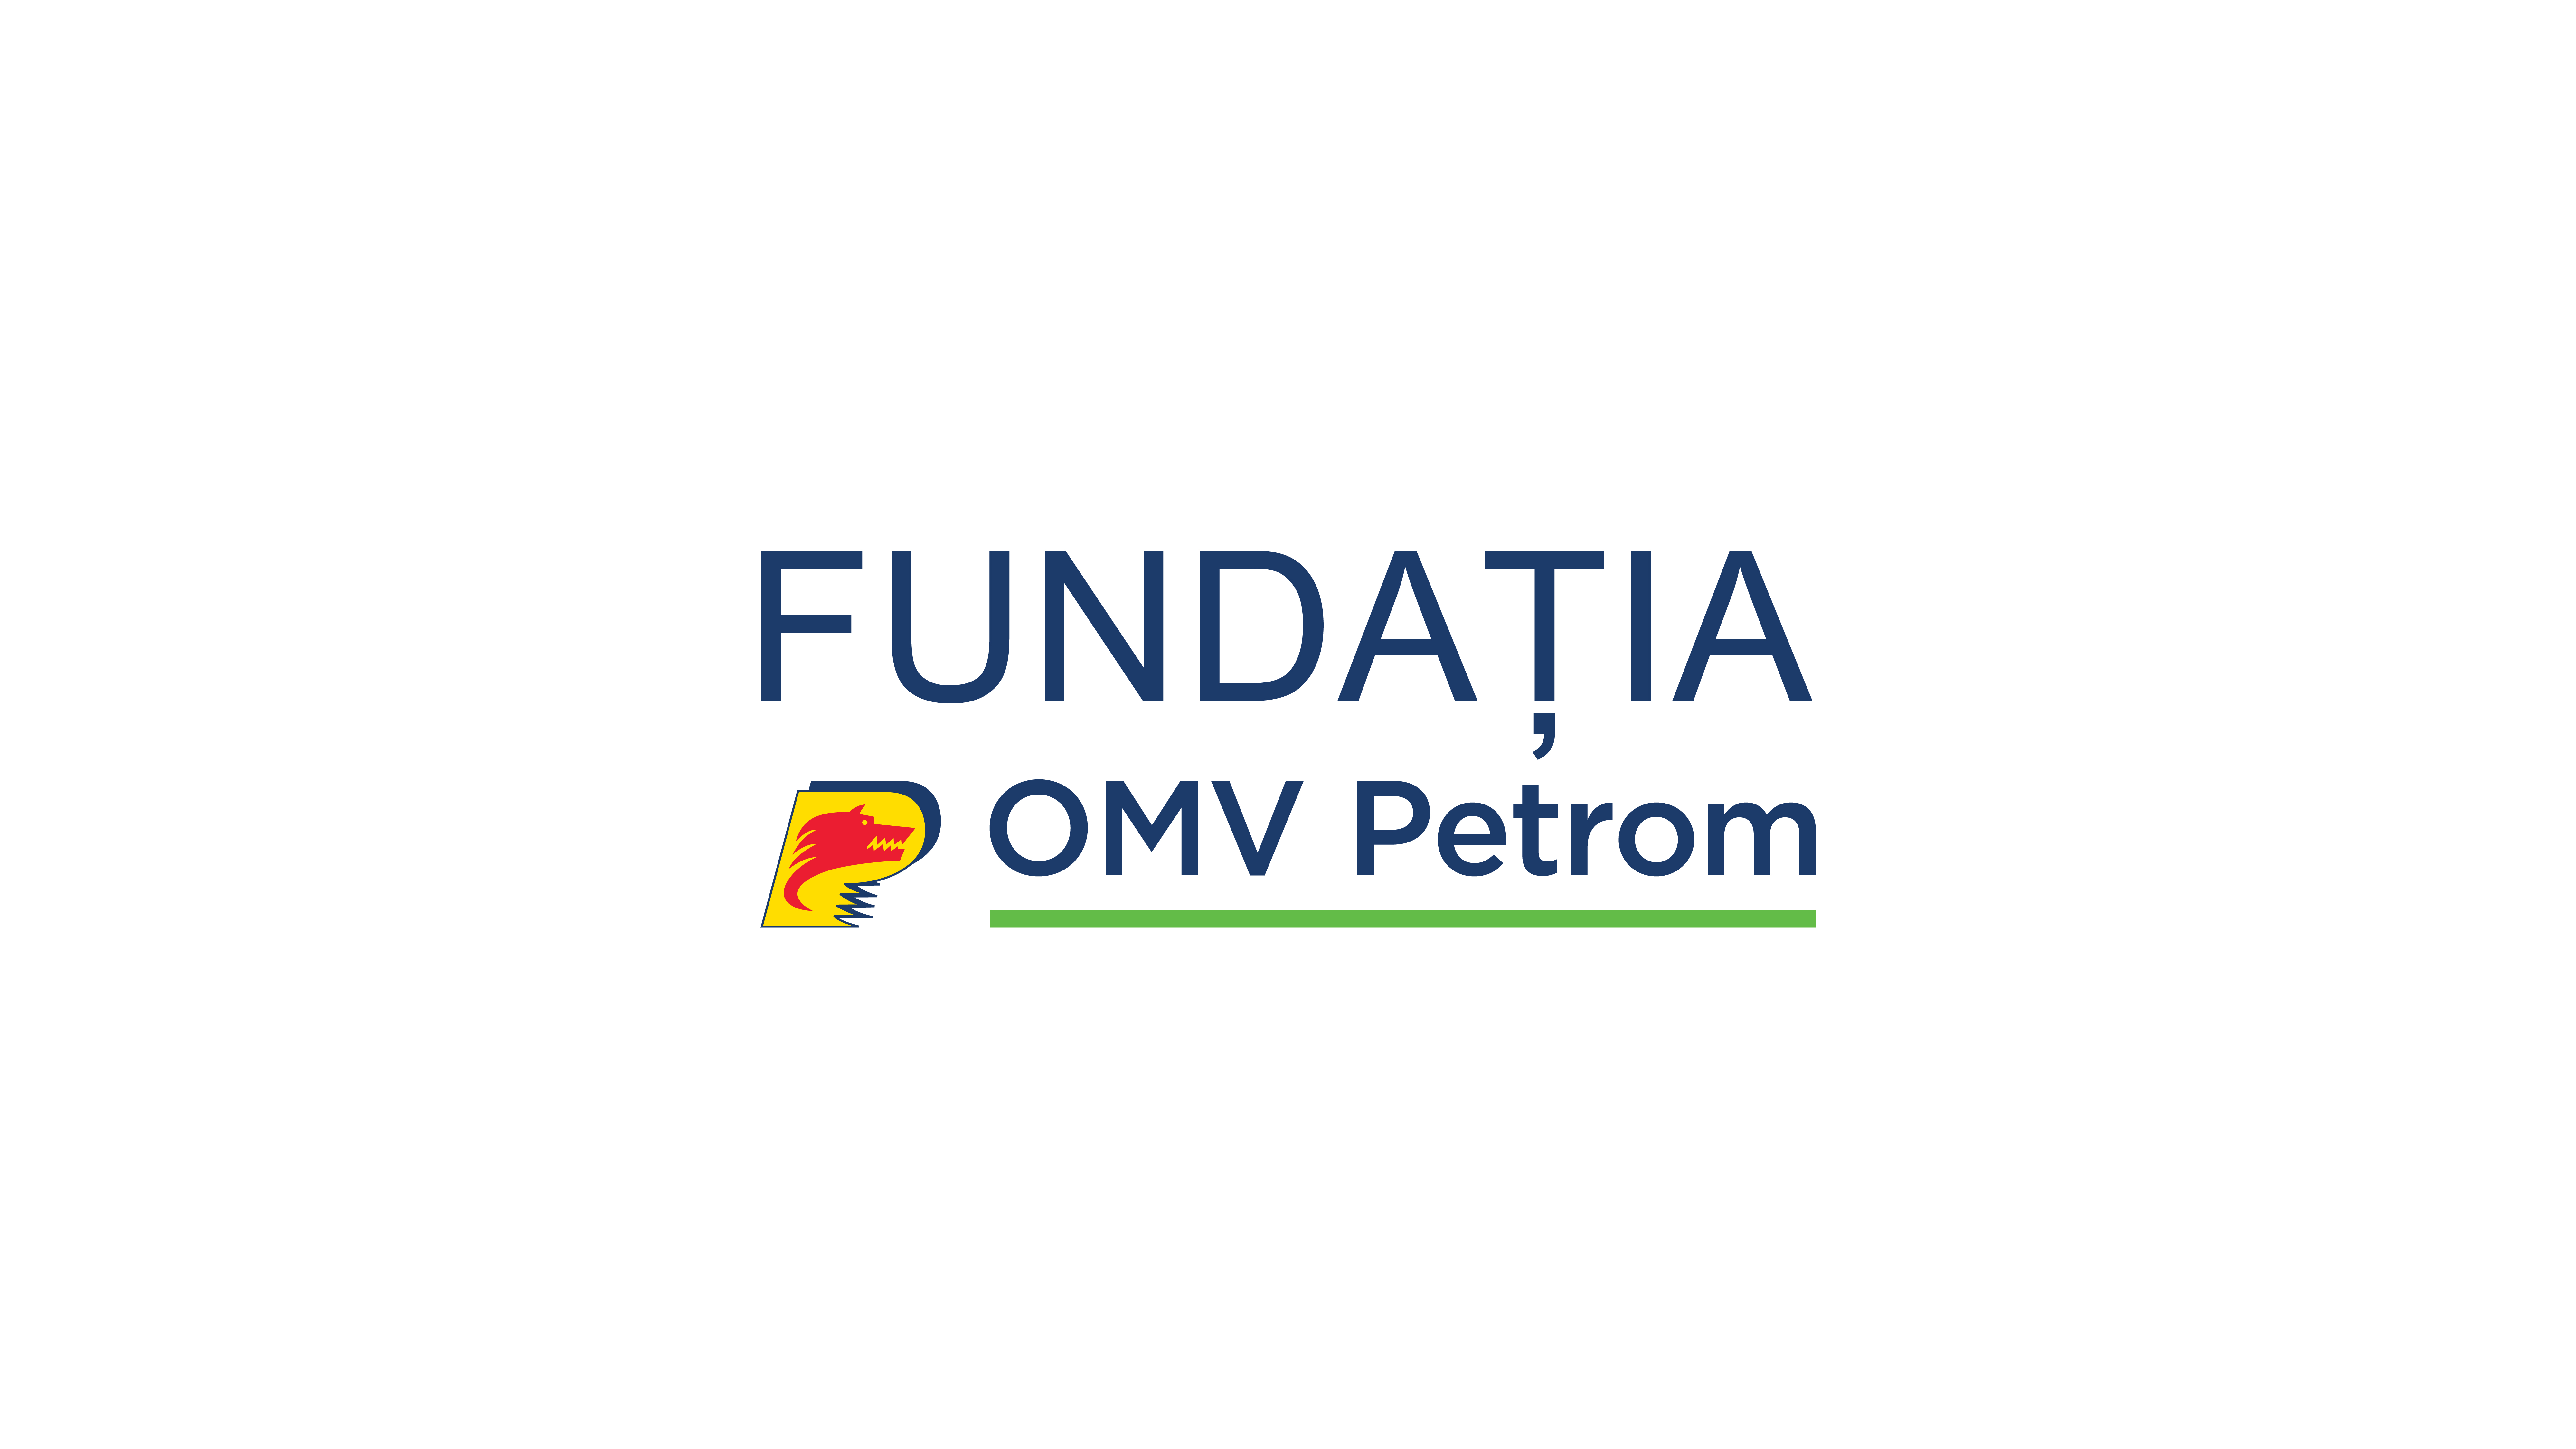 Fundatia OMV Petrom logo